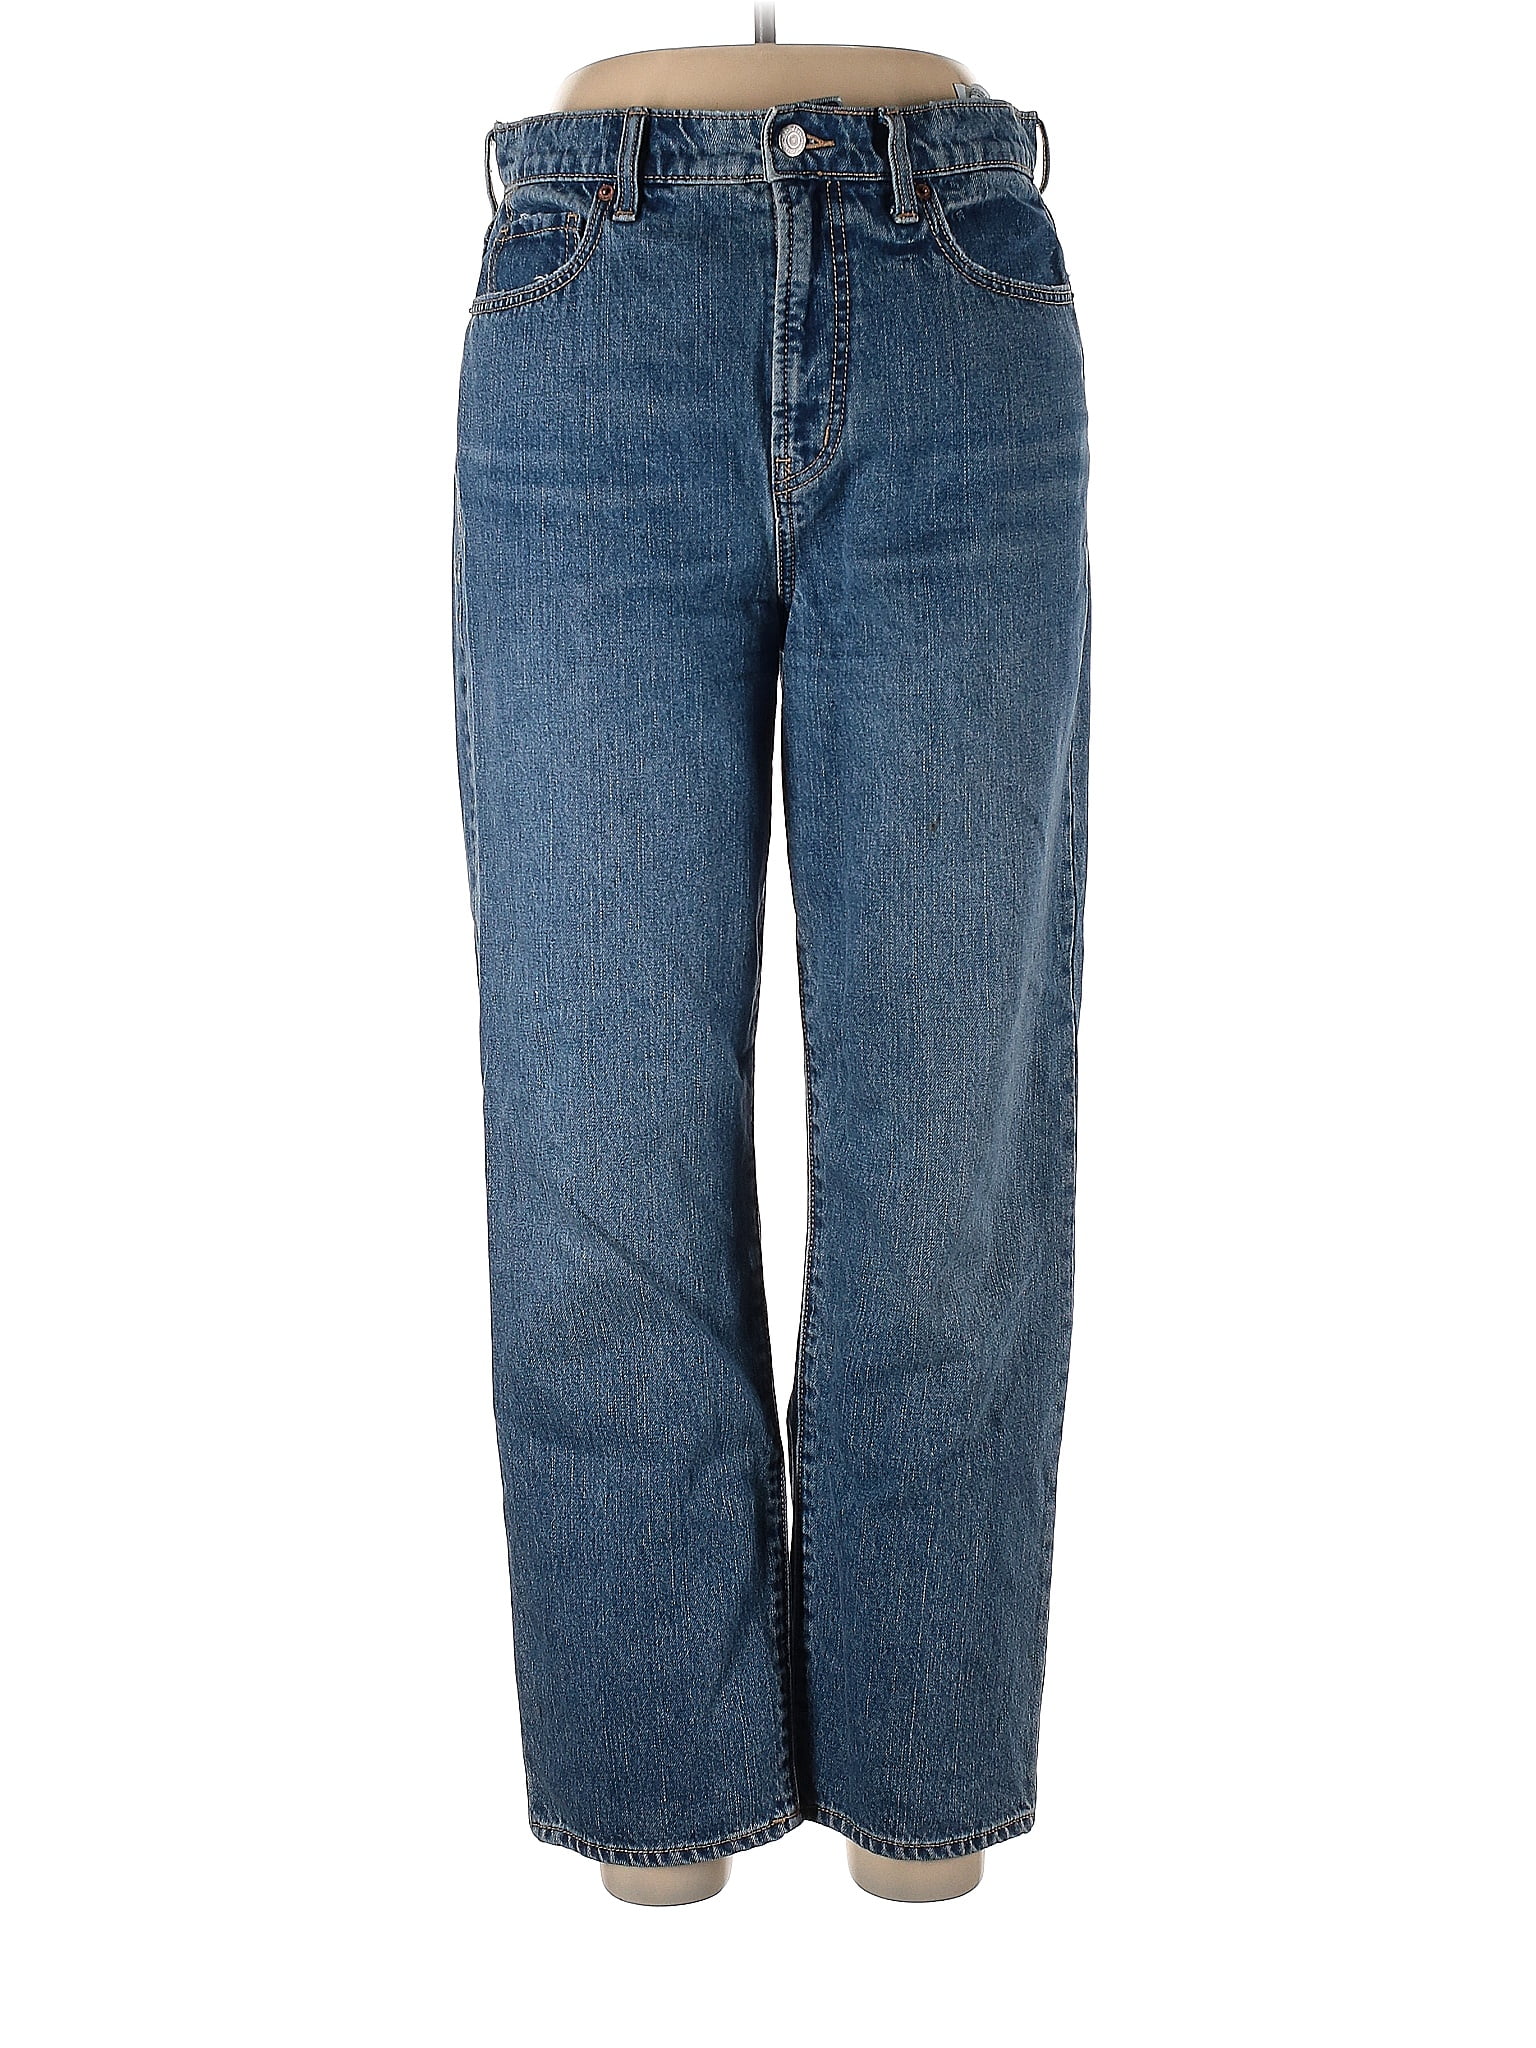 Old Navy 100% Cotton Blue Jeans Size 10 - 48% off | thredUP